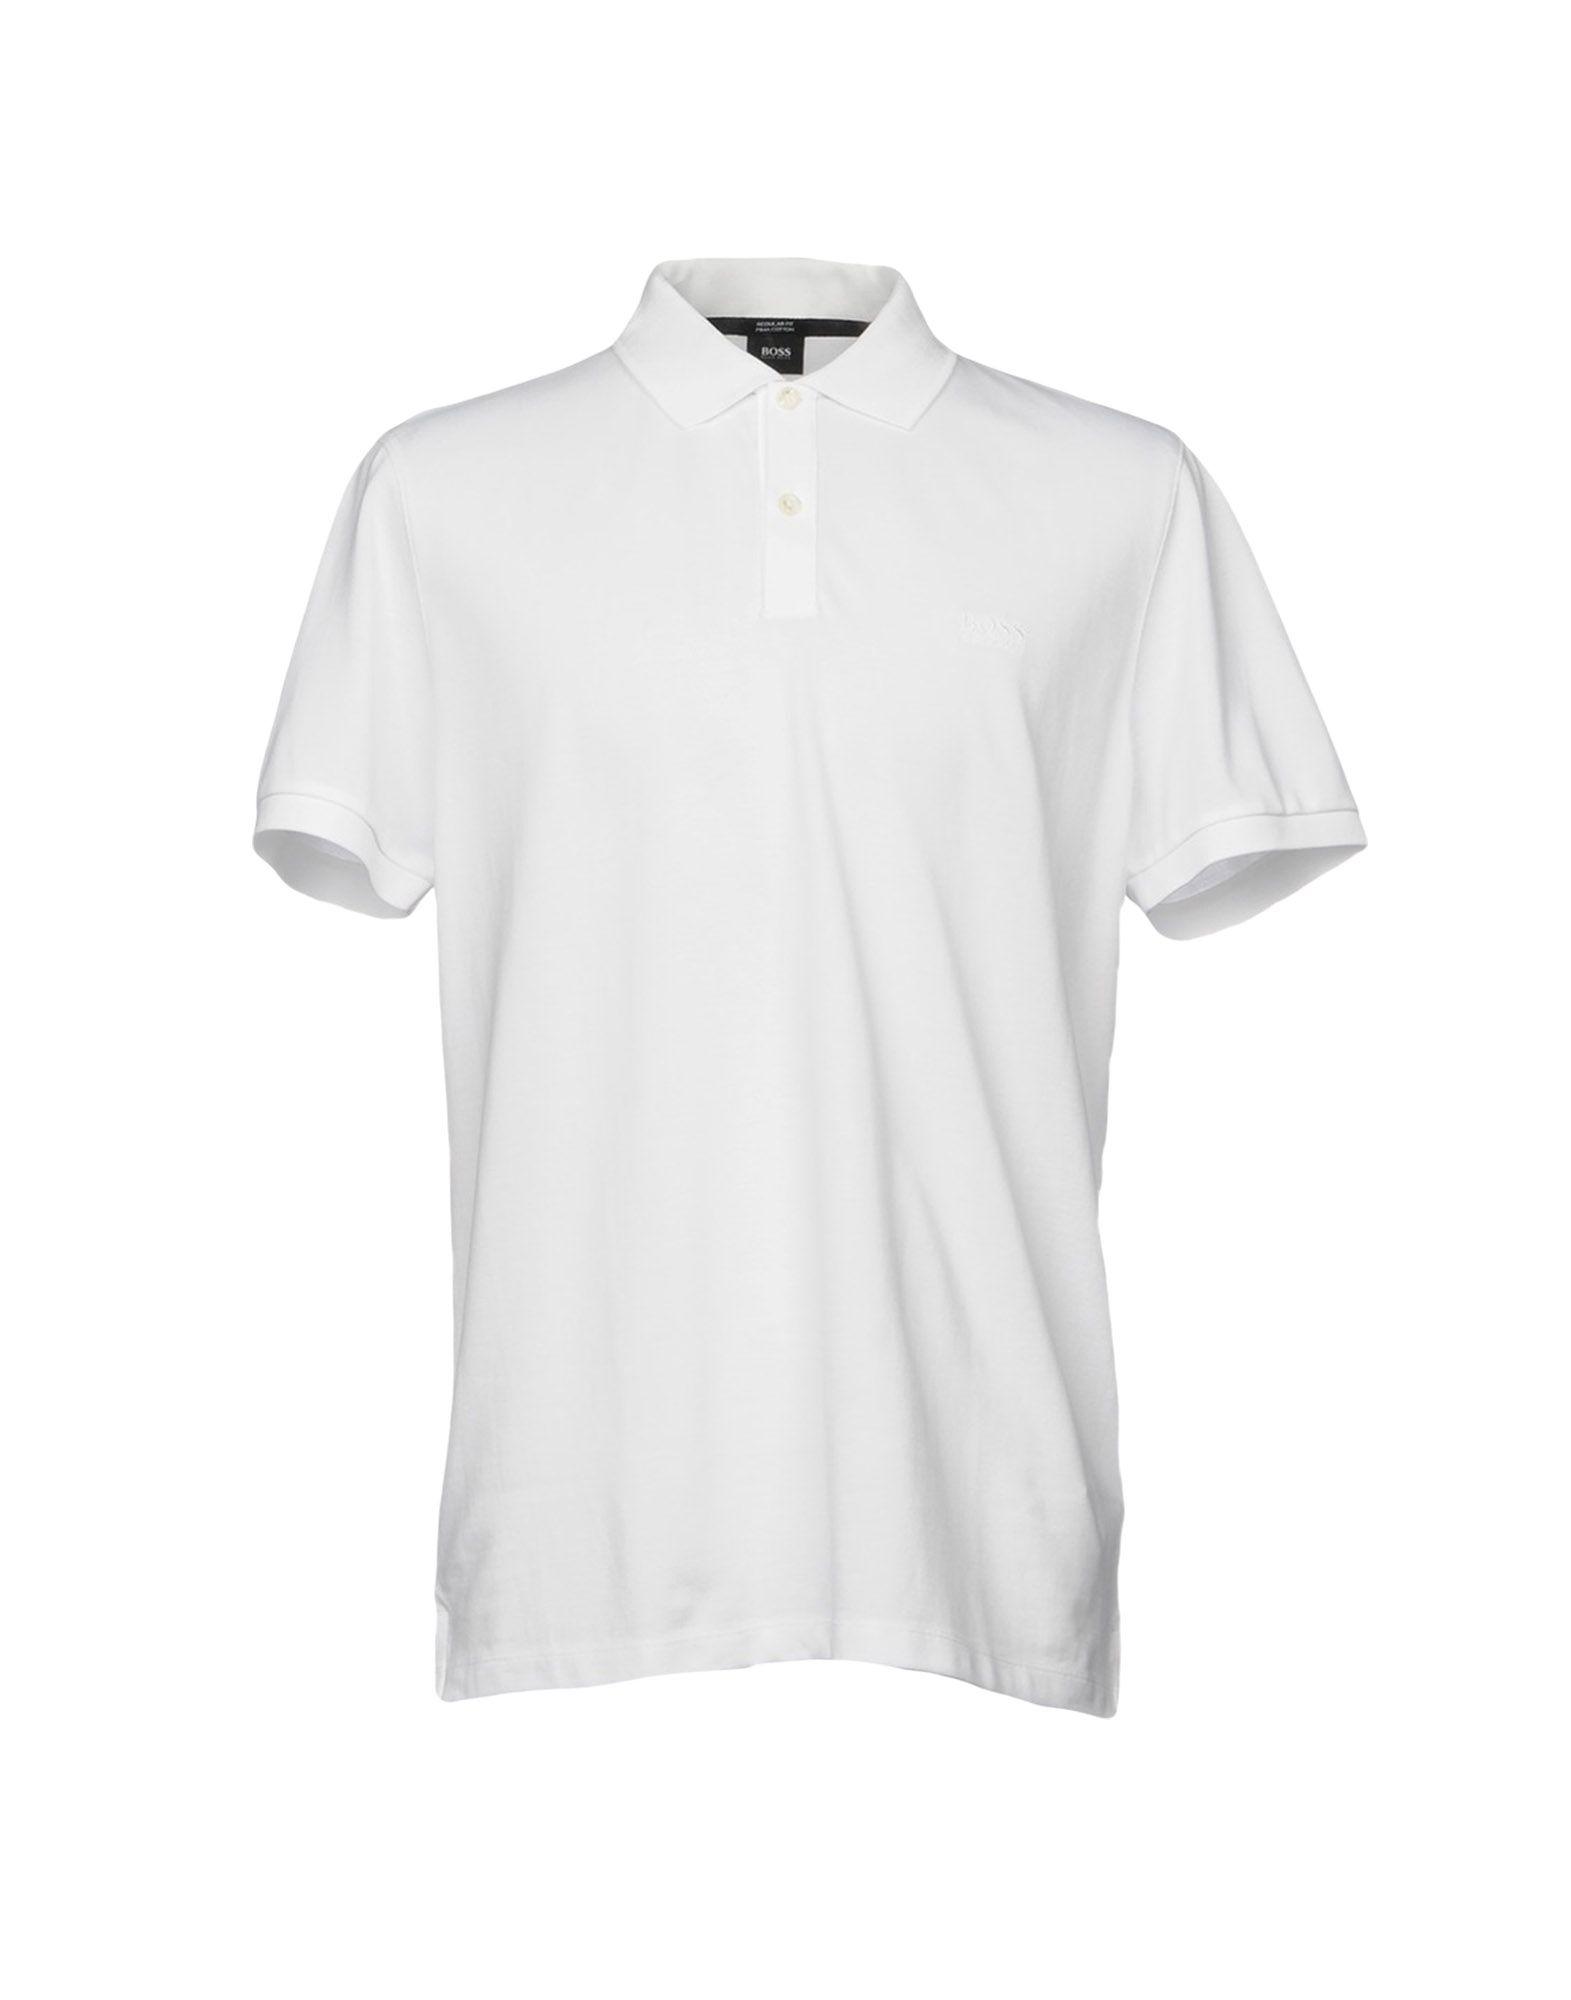 BOSS by Hugo Boss Cotton Polo Shirt in White for Men - Lyst